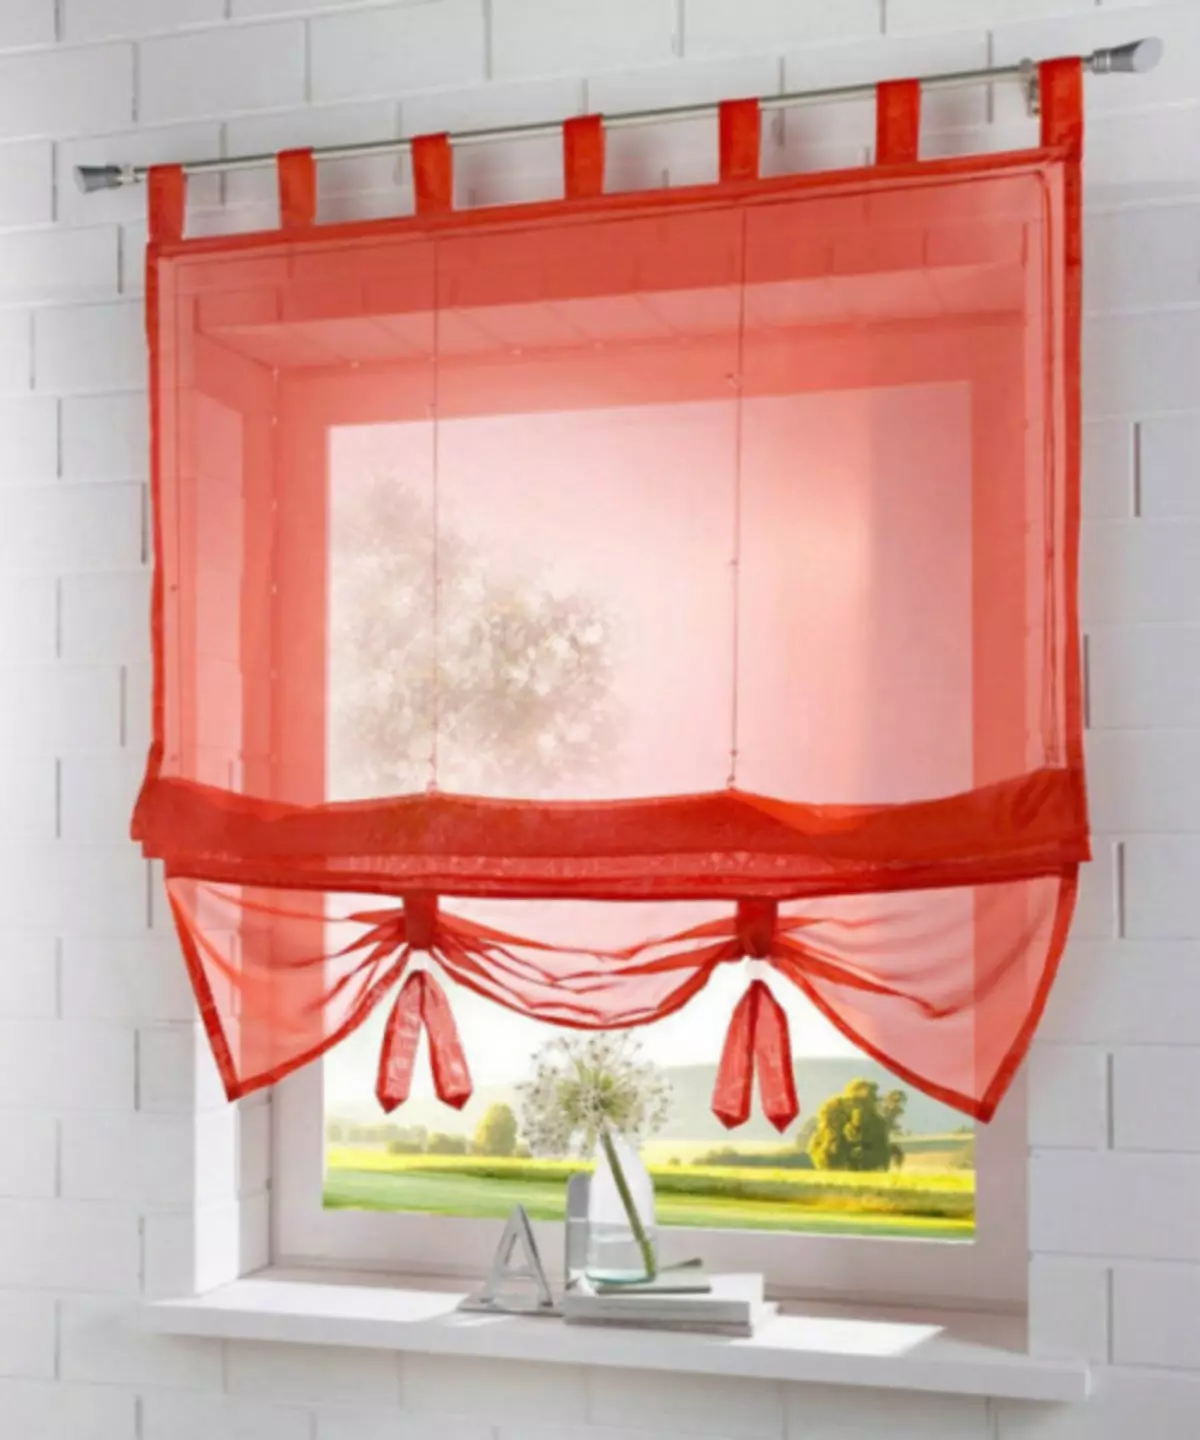 Римская штора на кухонном окне